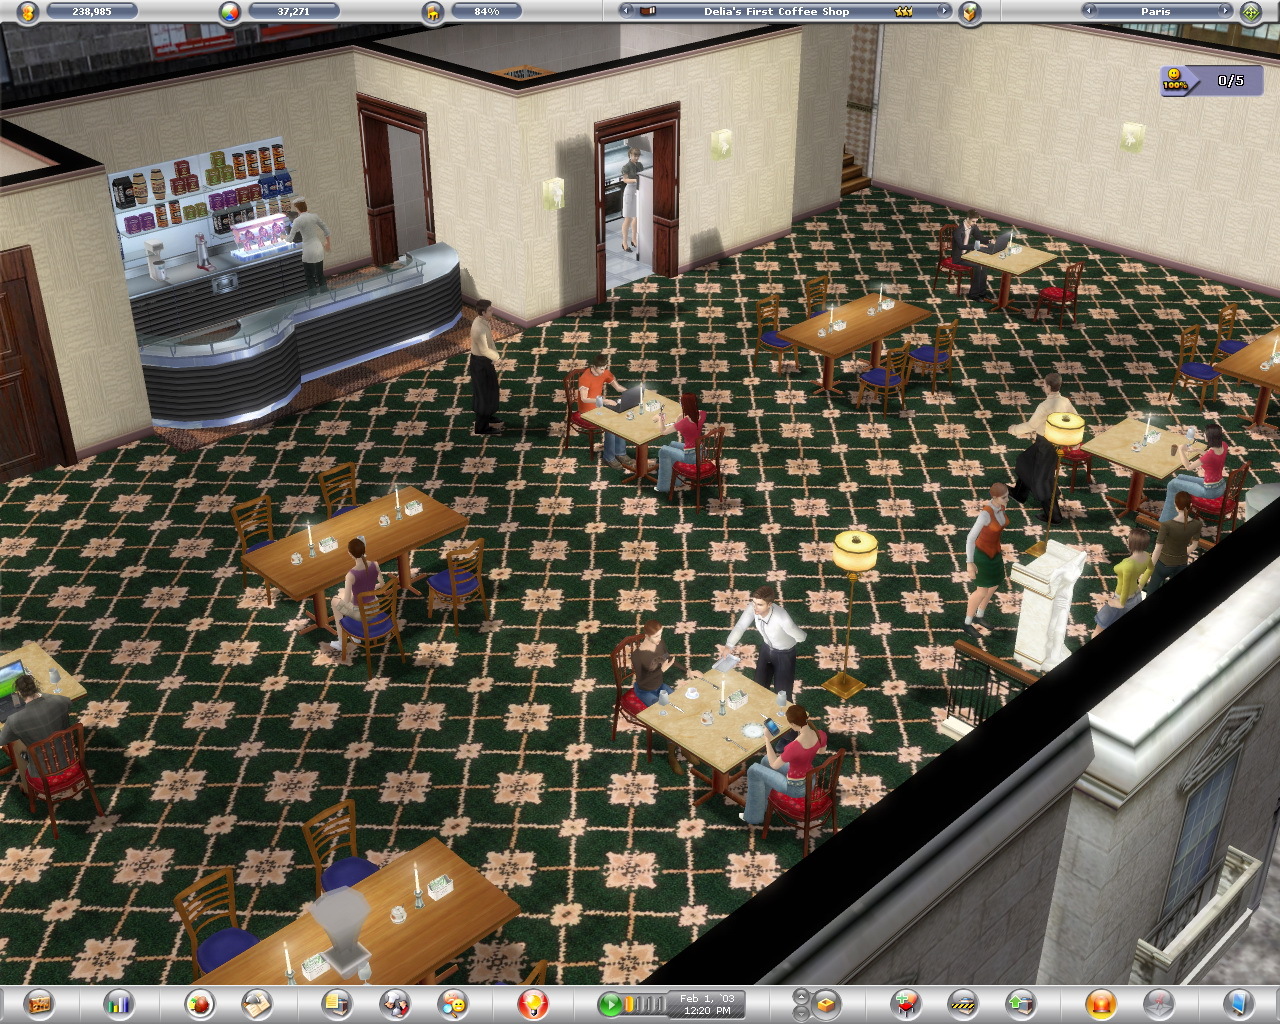 Restaurant Empire II, PC Steam Jogo